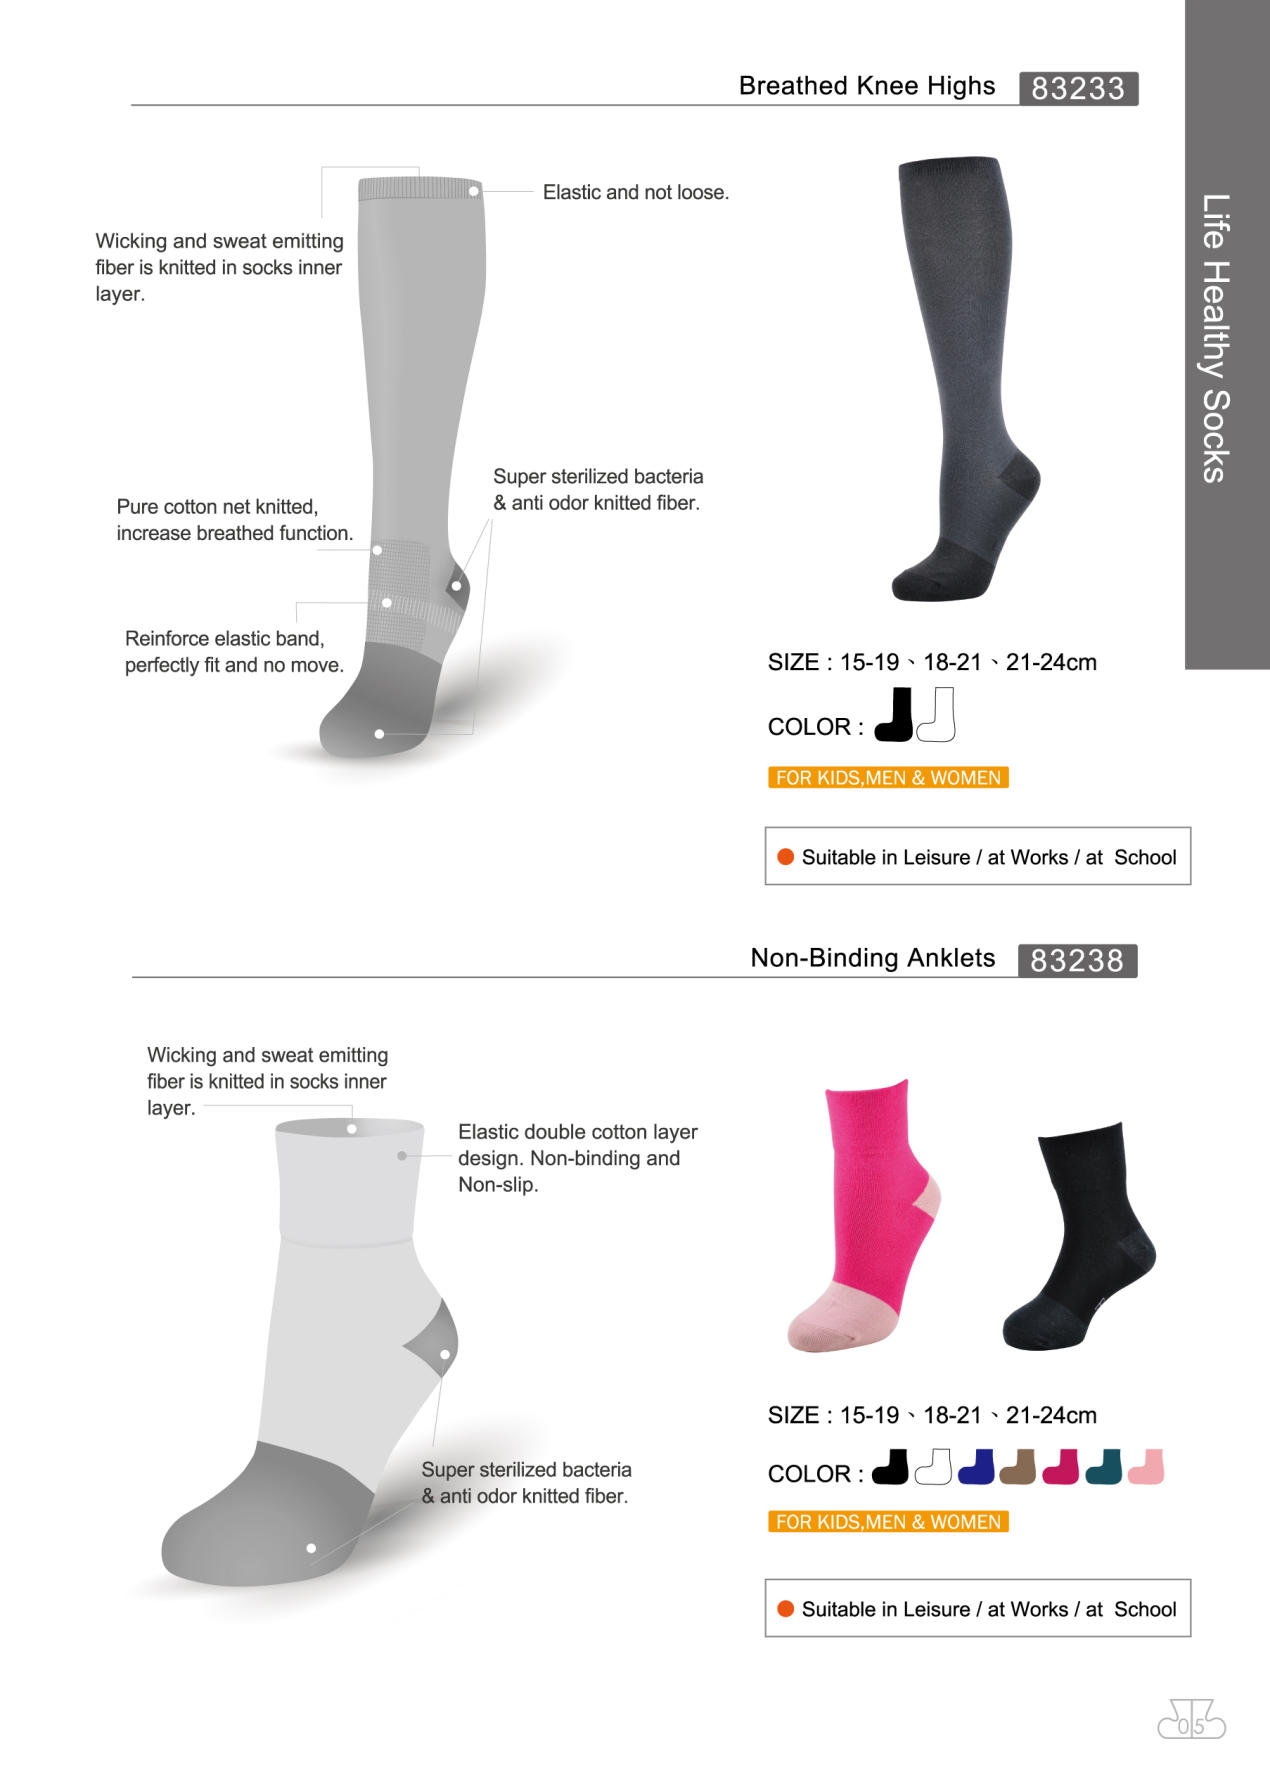 Compression stockings、Anti-odor socks KOOLFREE manufacturers Taiwan&China